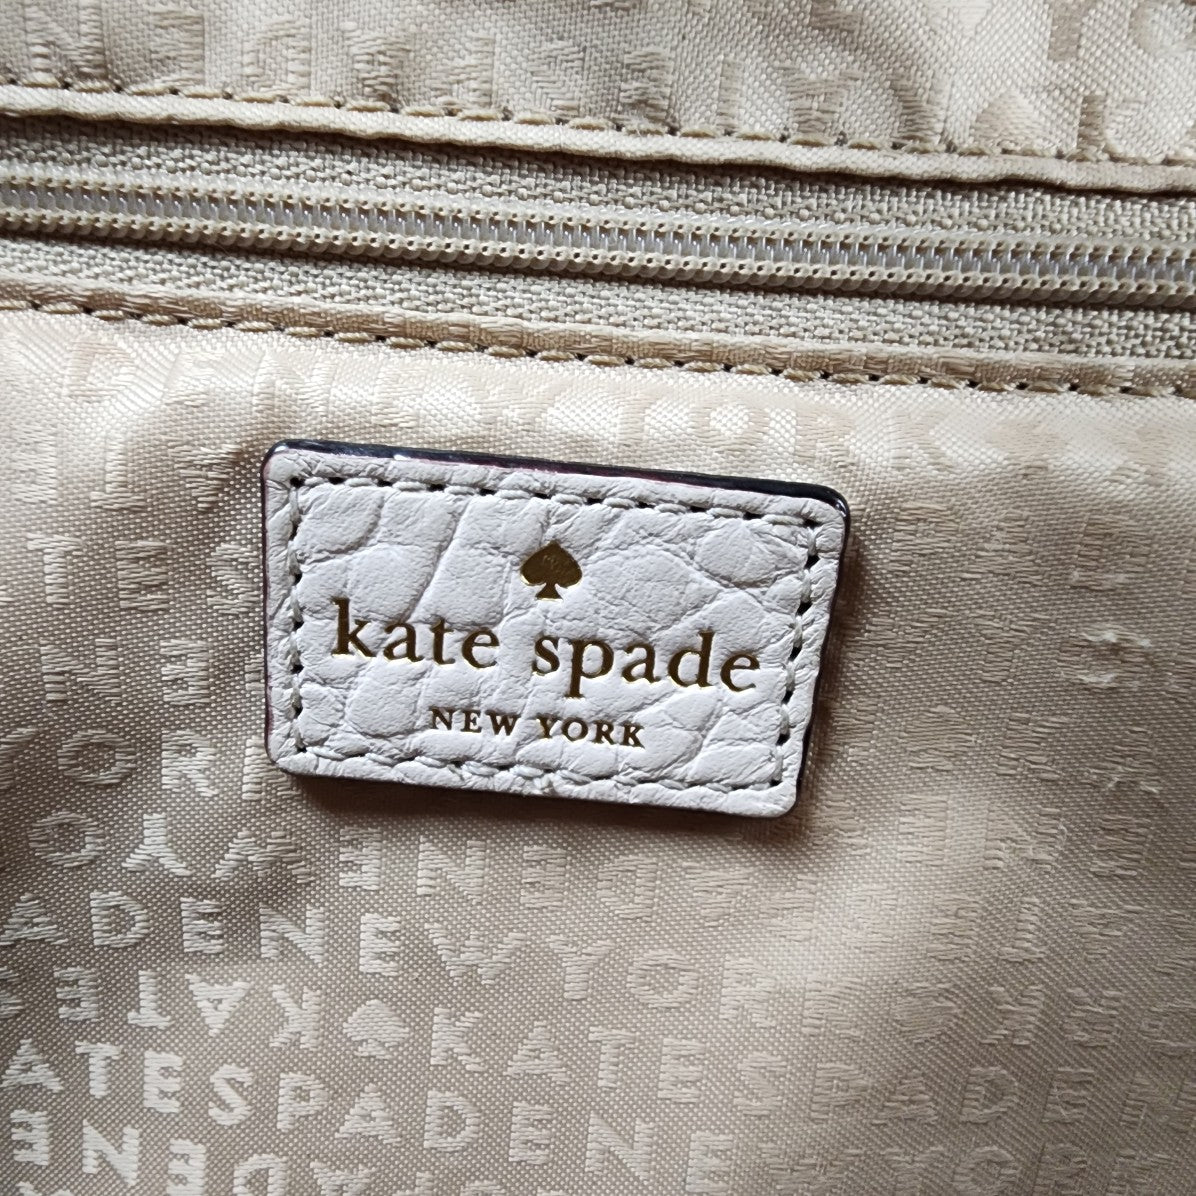 Kate Spade White Leather Laser Cut Satchel Purse